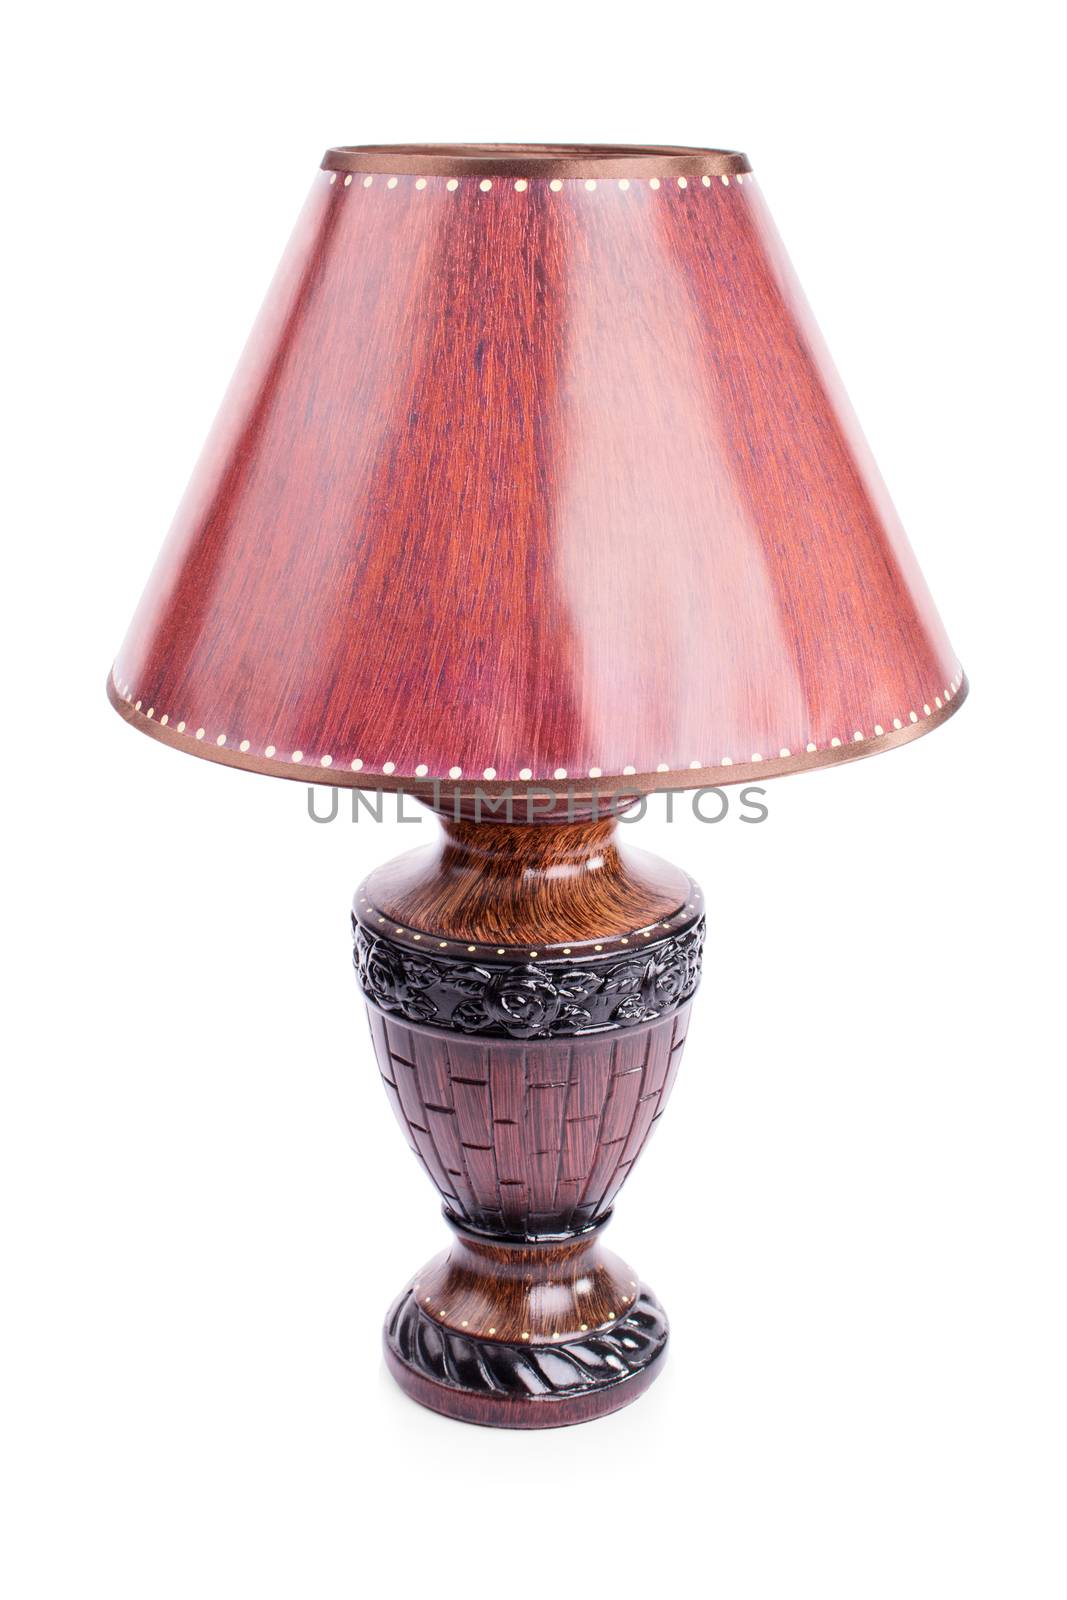 Night lamp by Mendelex